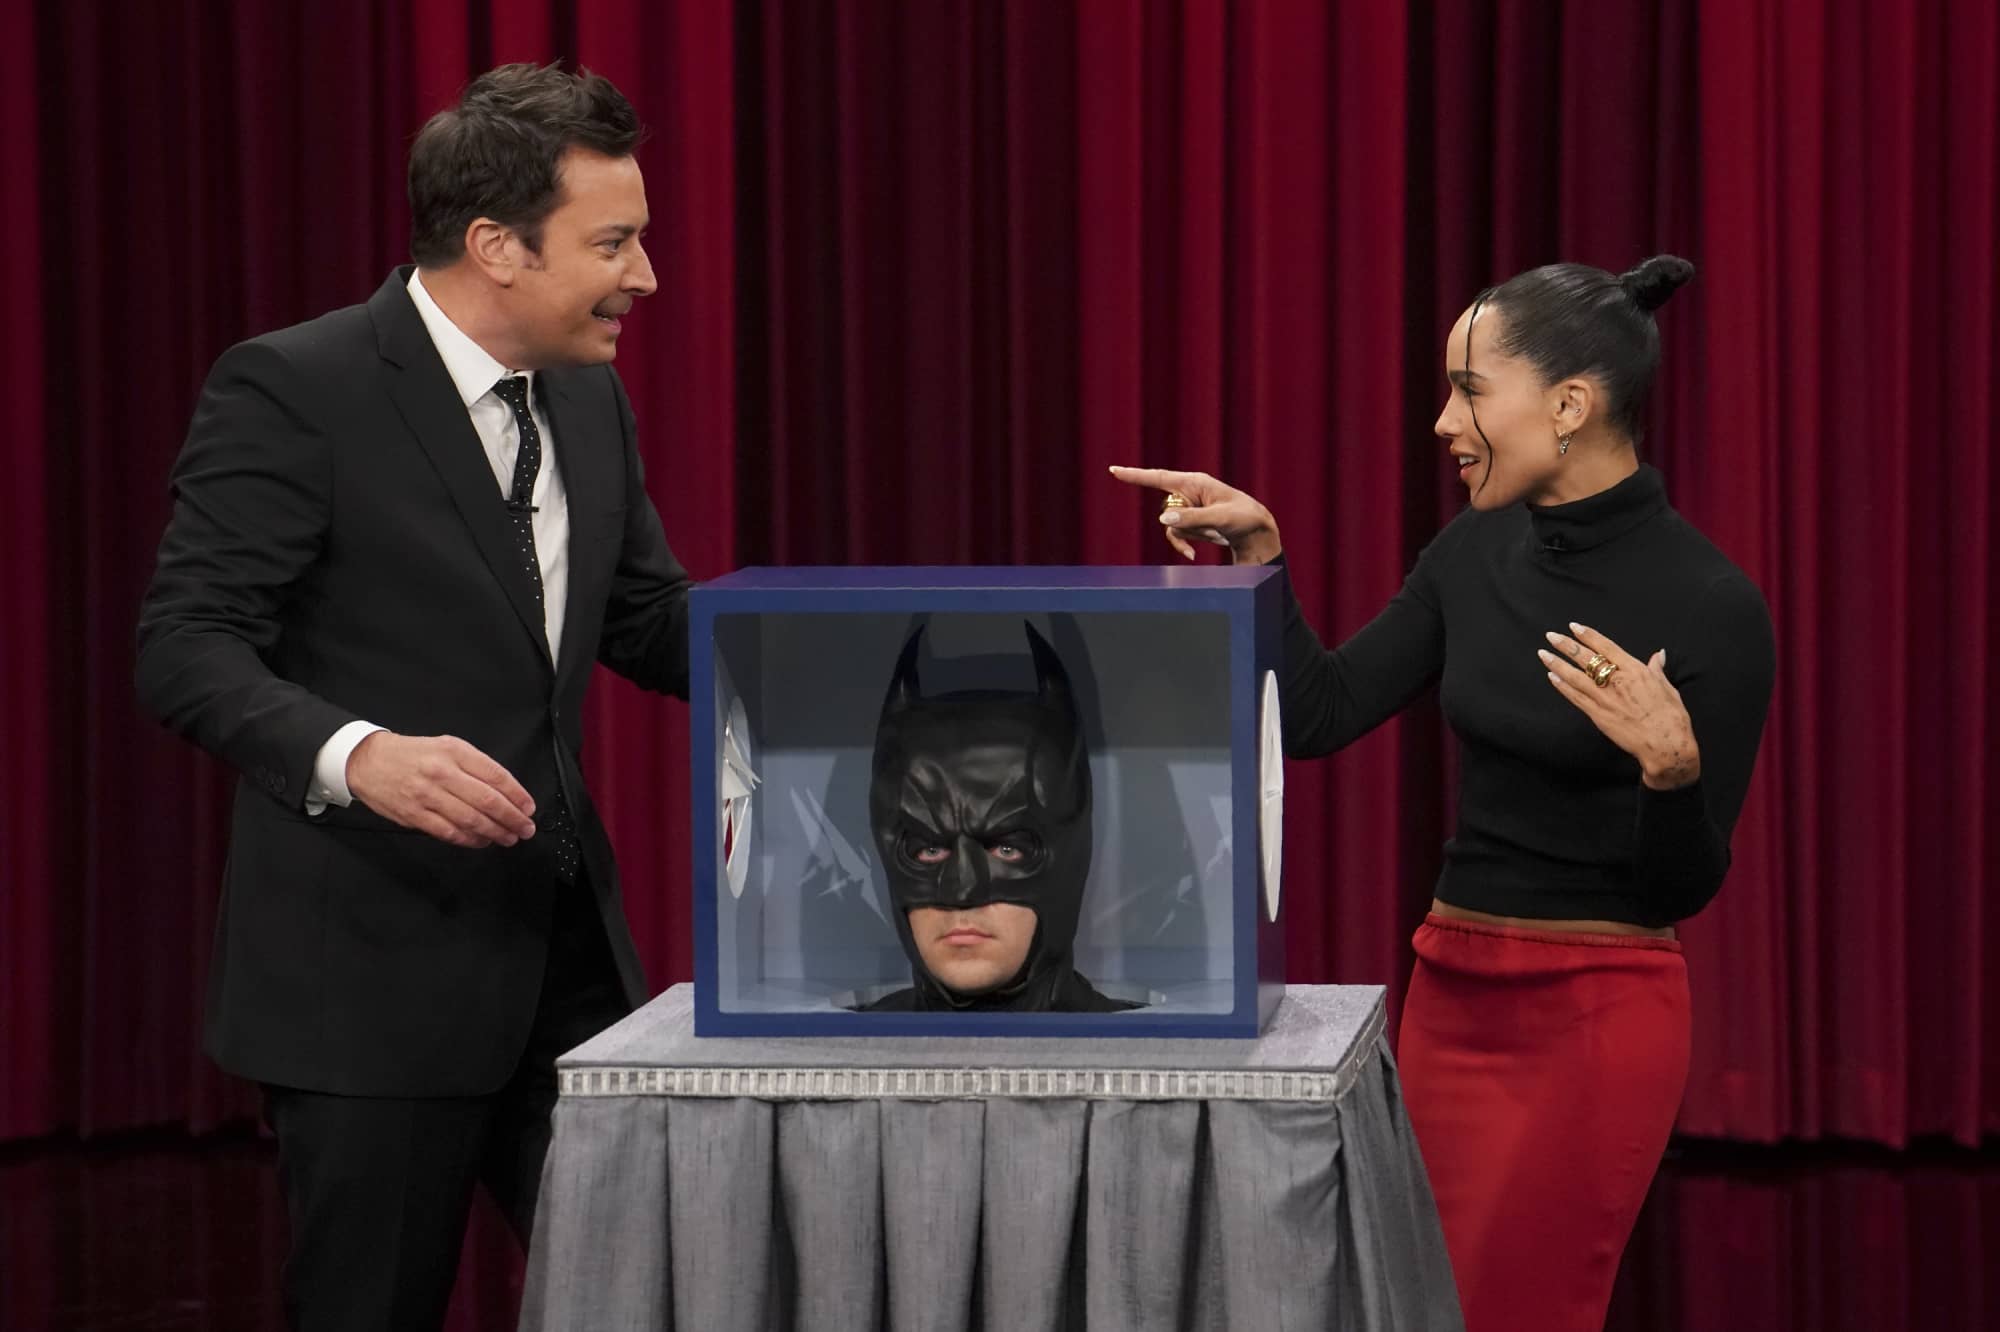 Zoe Kravitz promotes "The Batman" on "The Tonight Show"